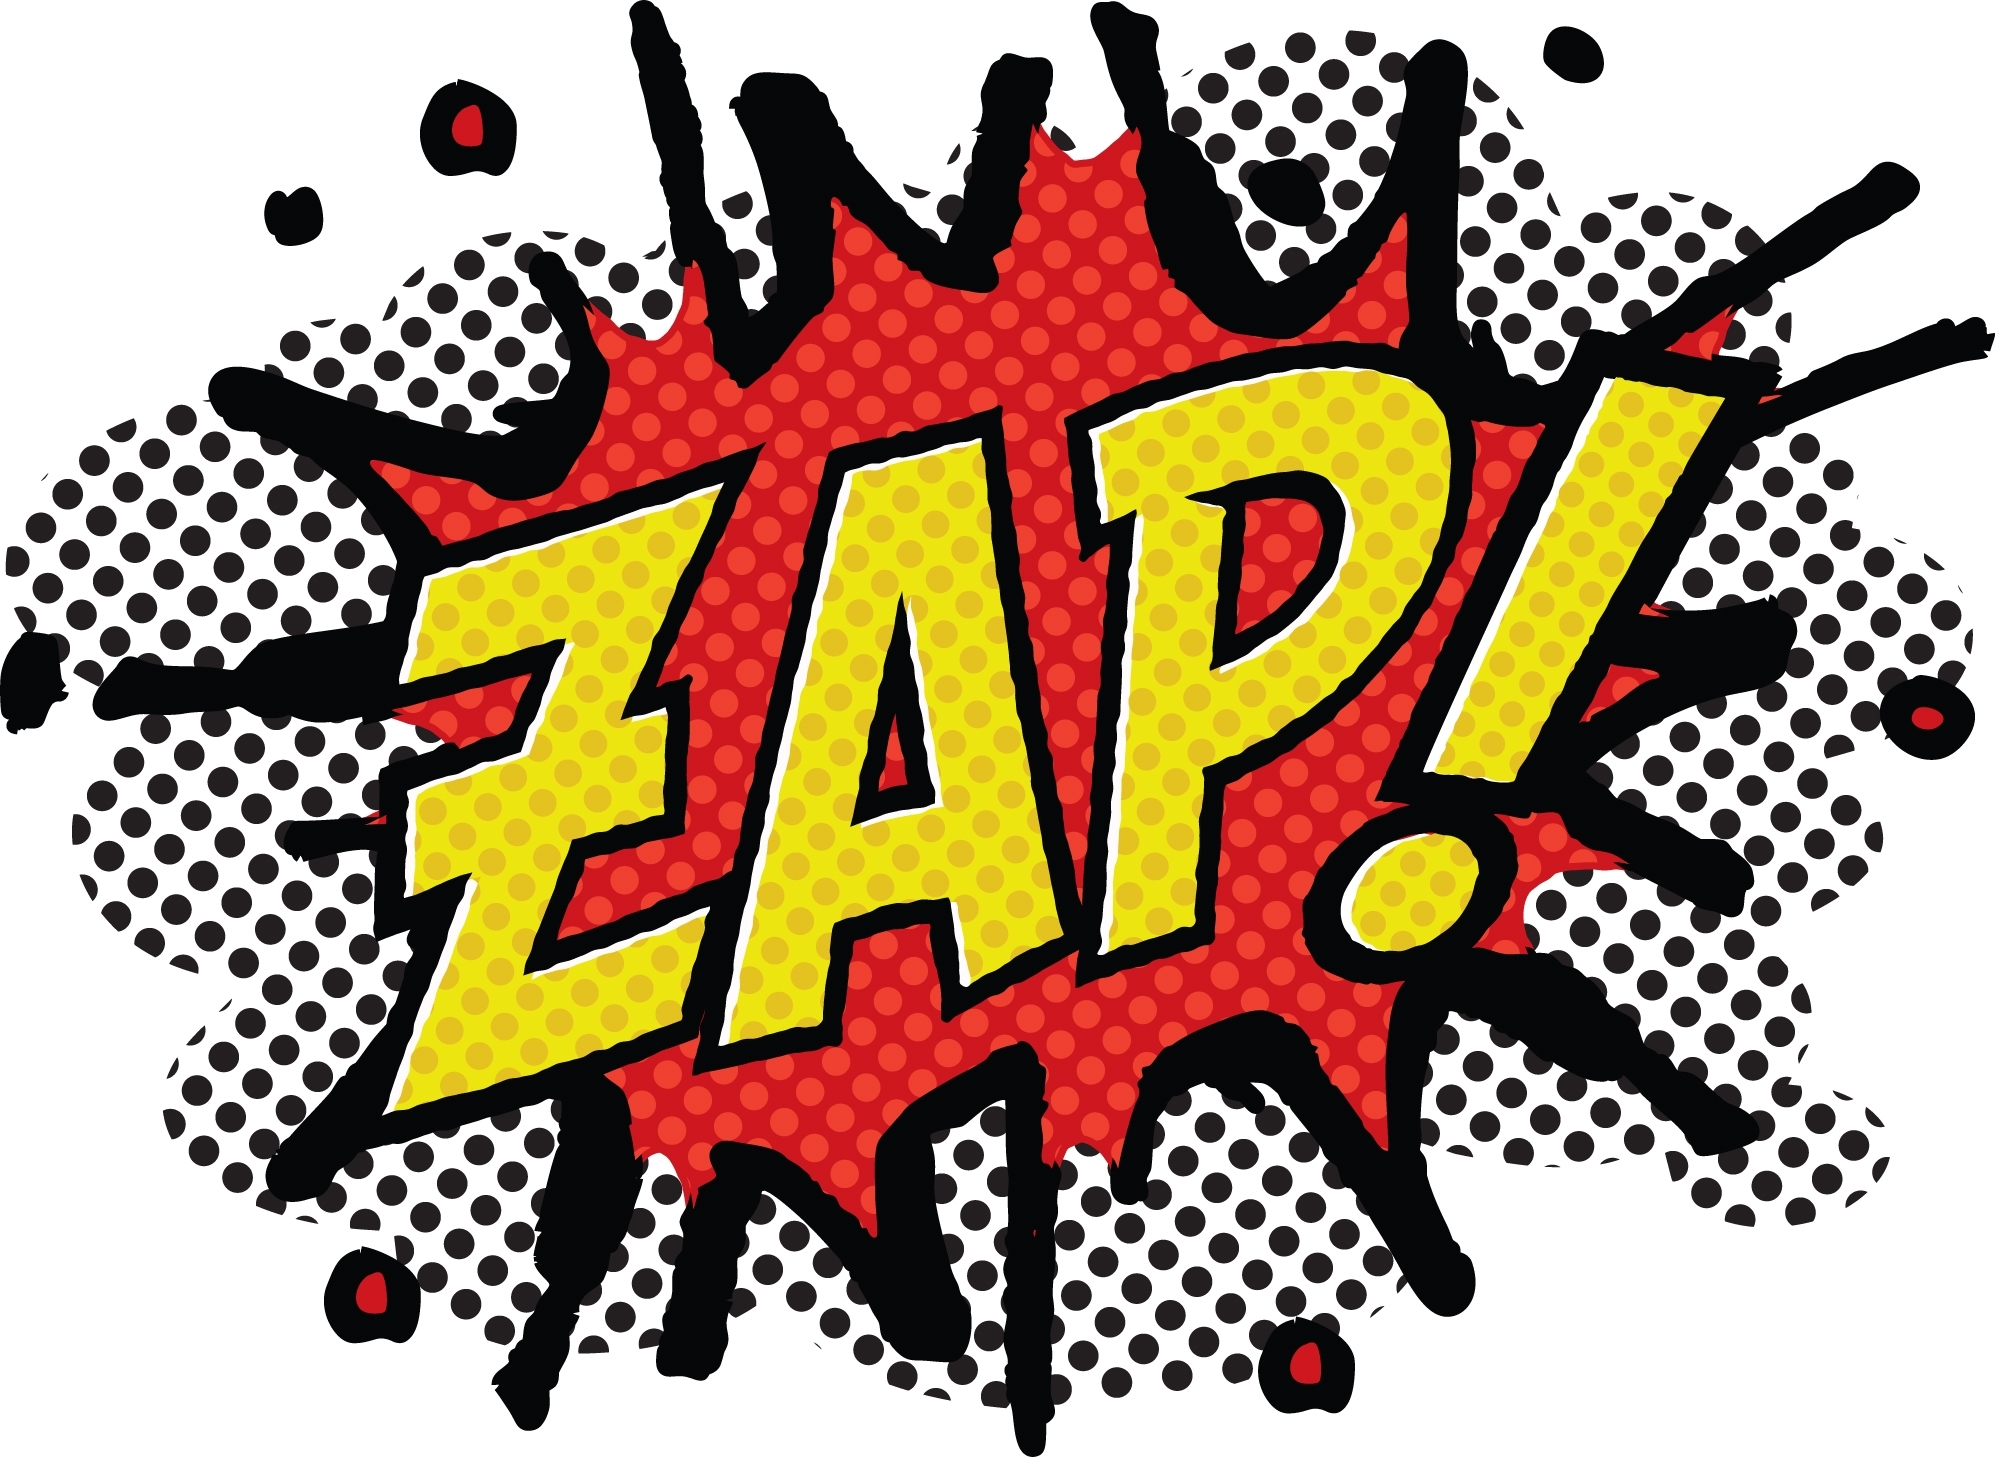 Zap Comic Book Style Zap Zap Zap Zap T Shirt Design By Jonathan Bybee